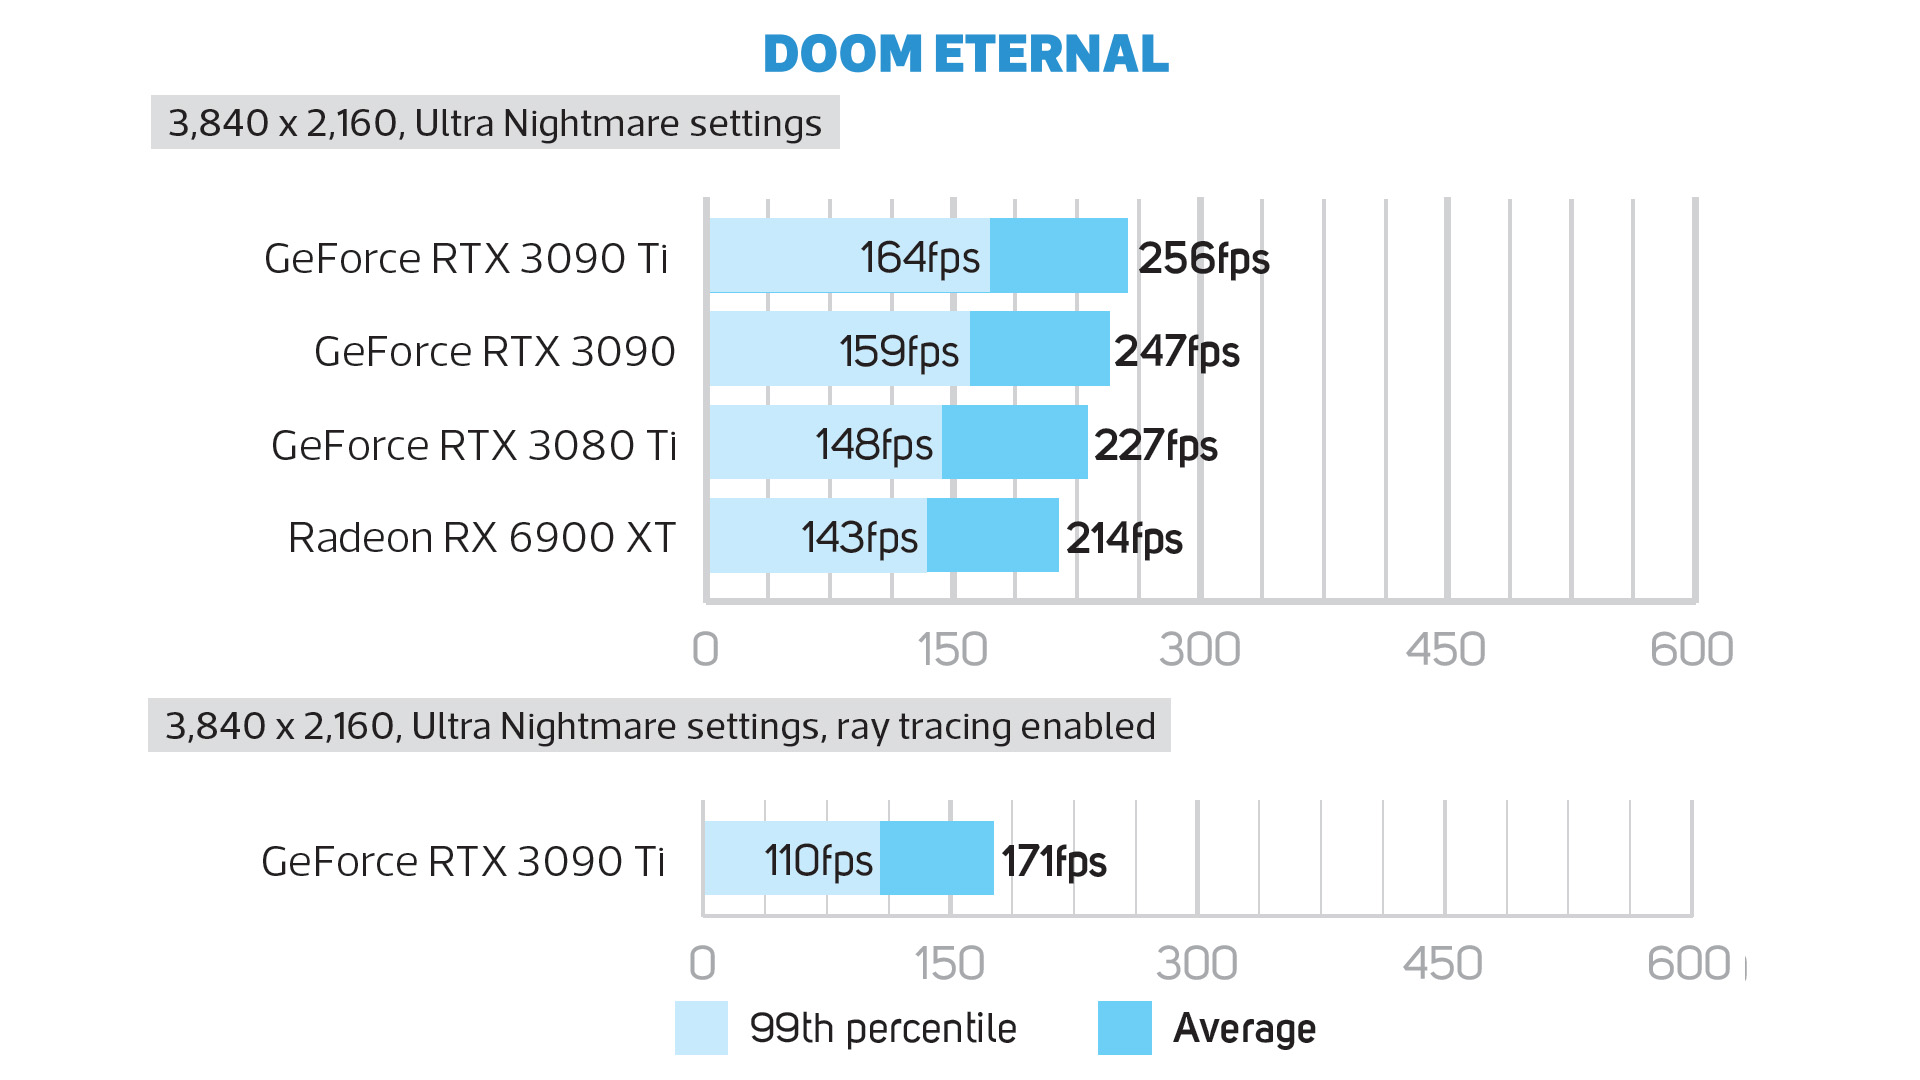 GeFoece RTX 3090 Ti Doom Eternal 4K frame rate